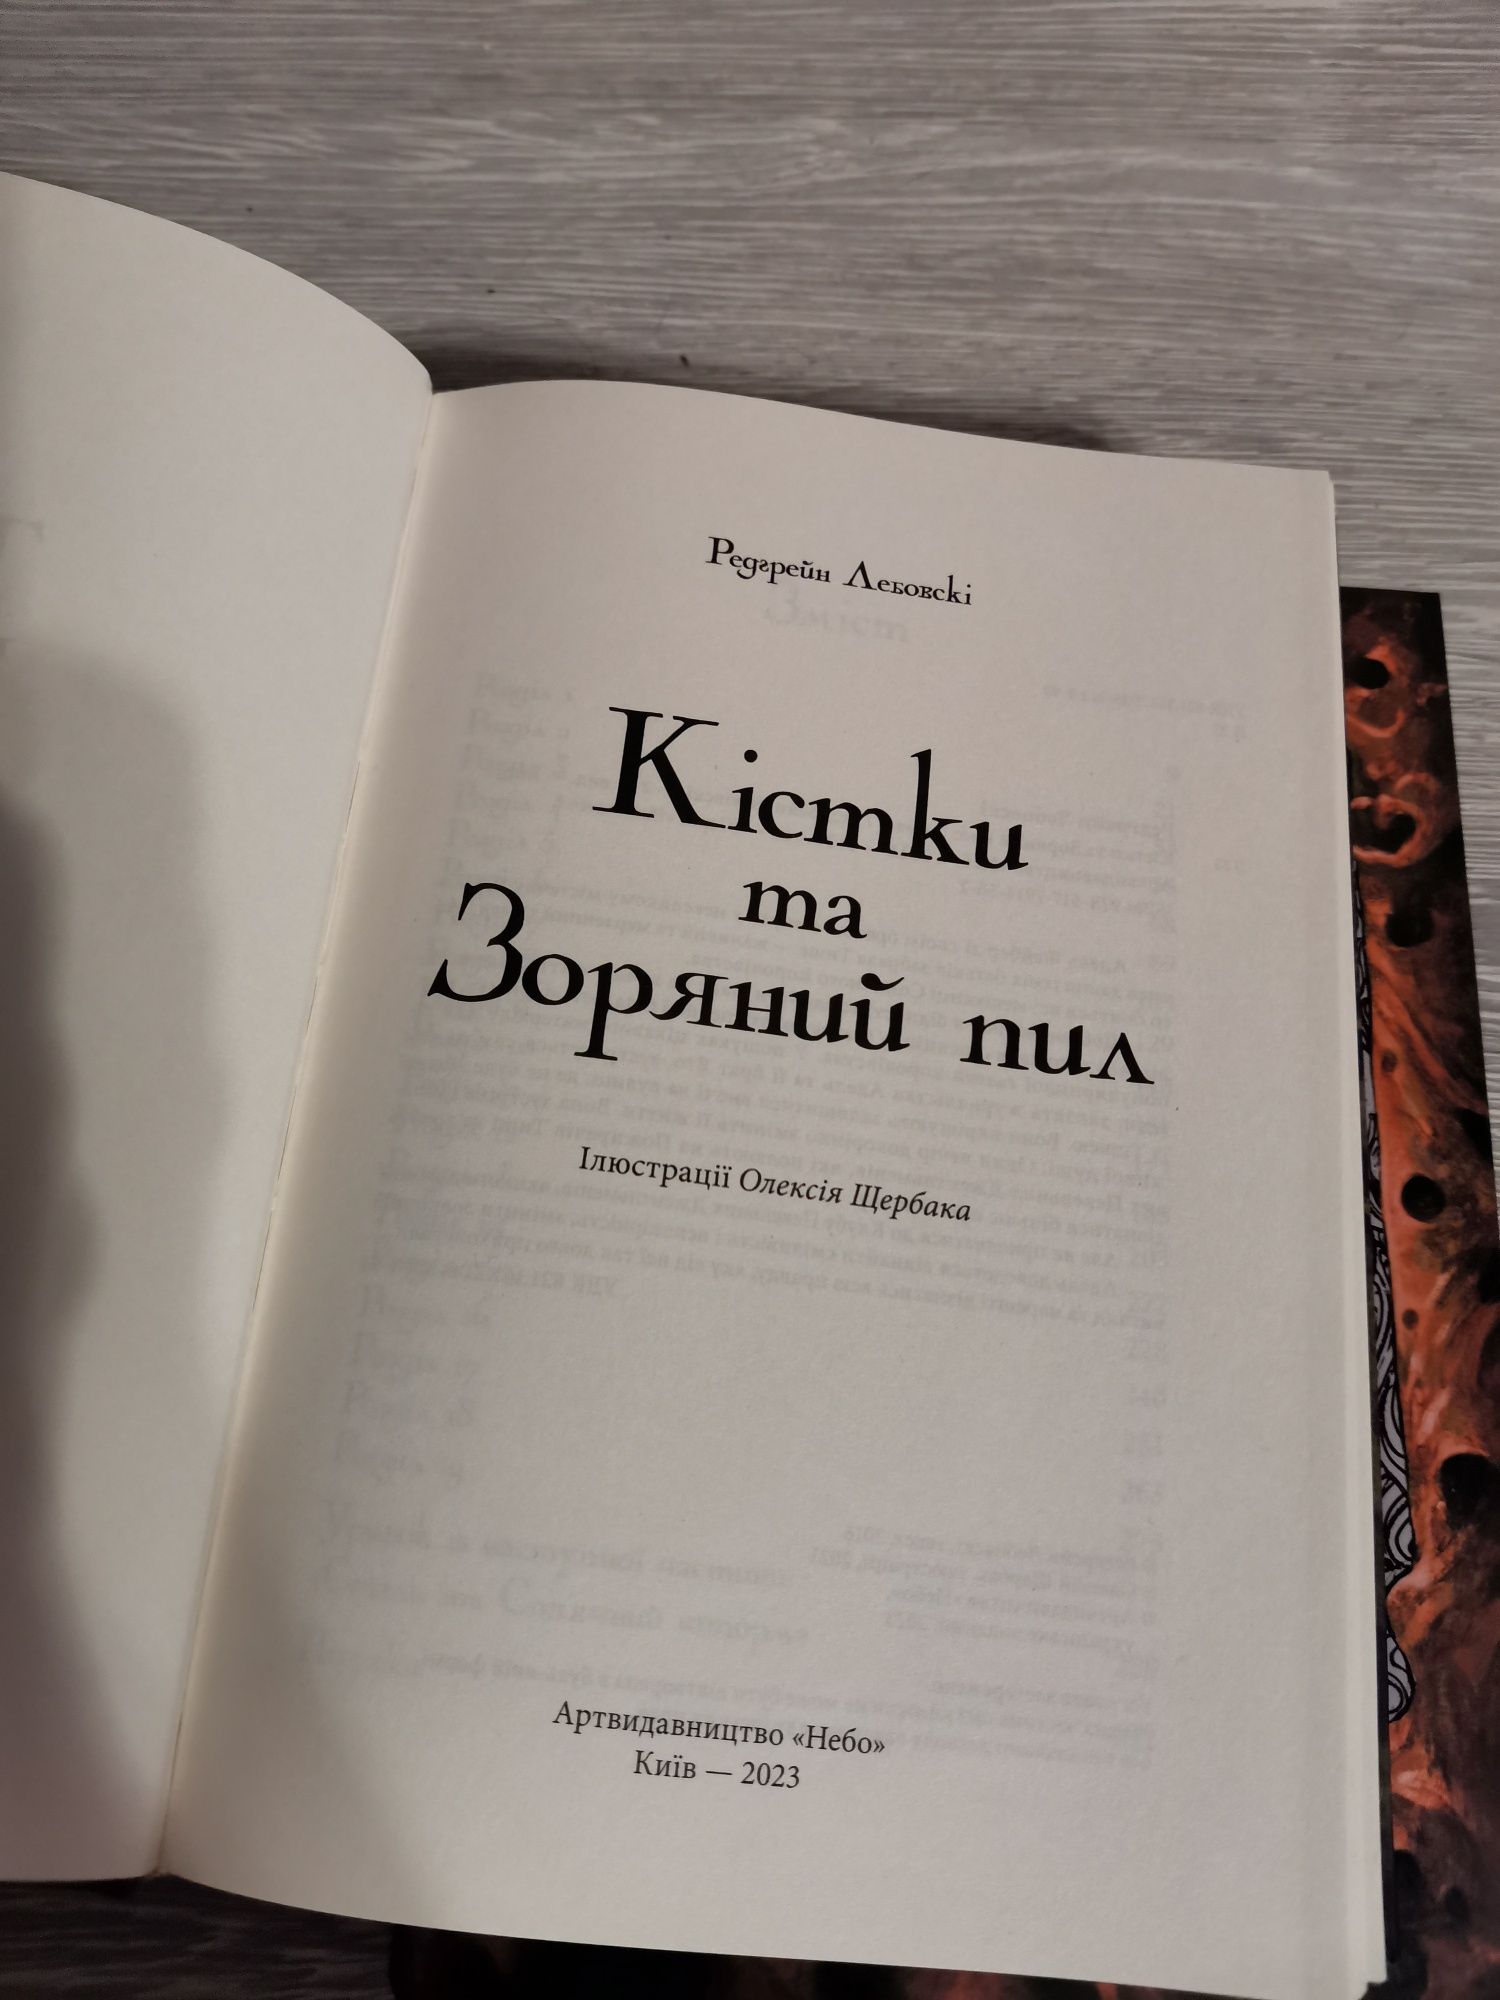 Книги Редглейн Лебовскі